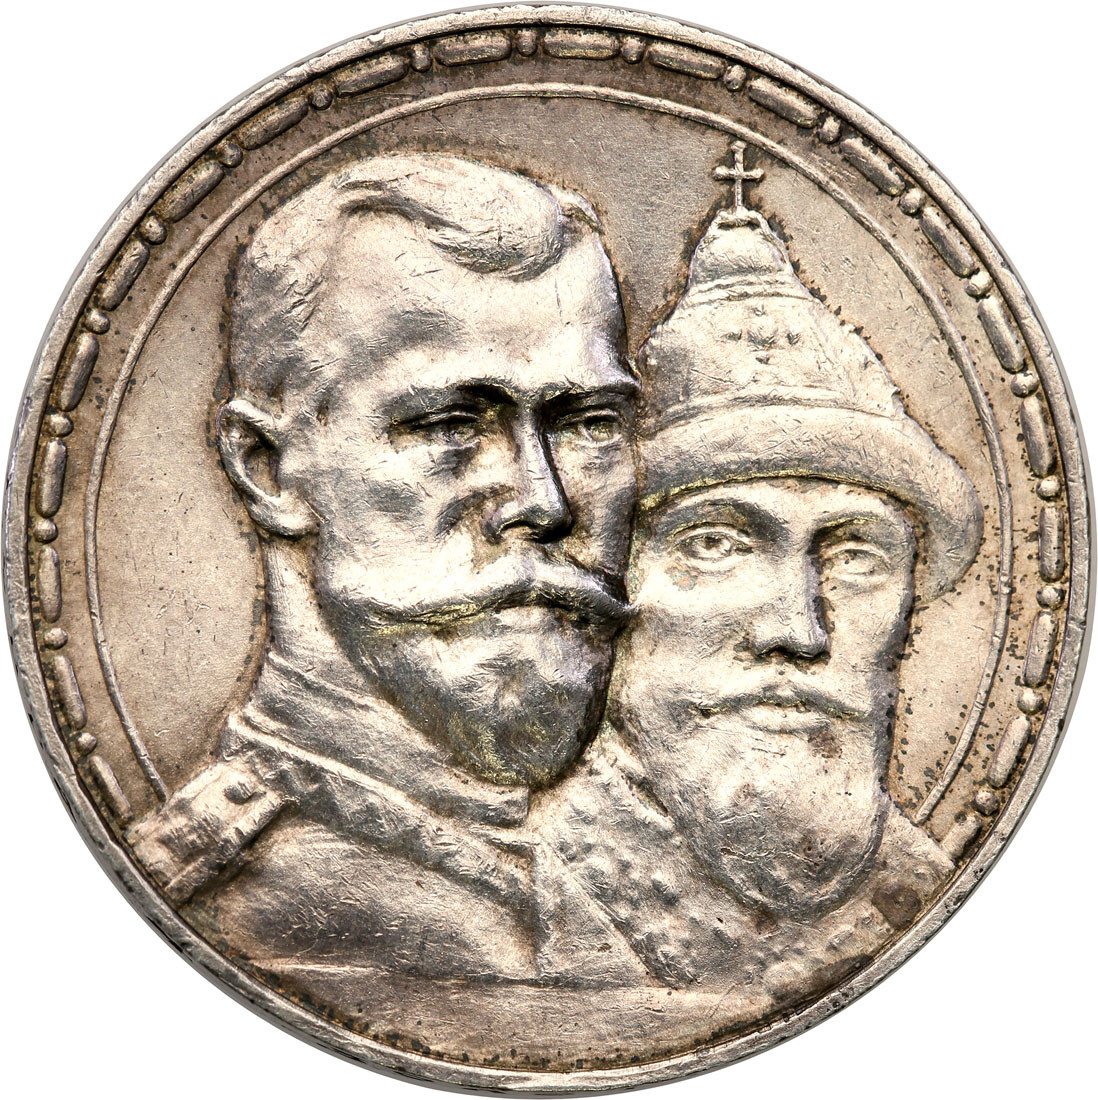 Rosja. Mikołaj II. Rubel 1913, Petersburg 300-lecie Dynastii Romanowów, stempel głęboki